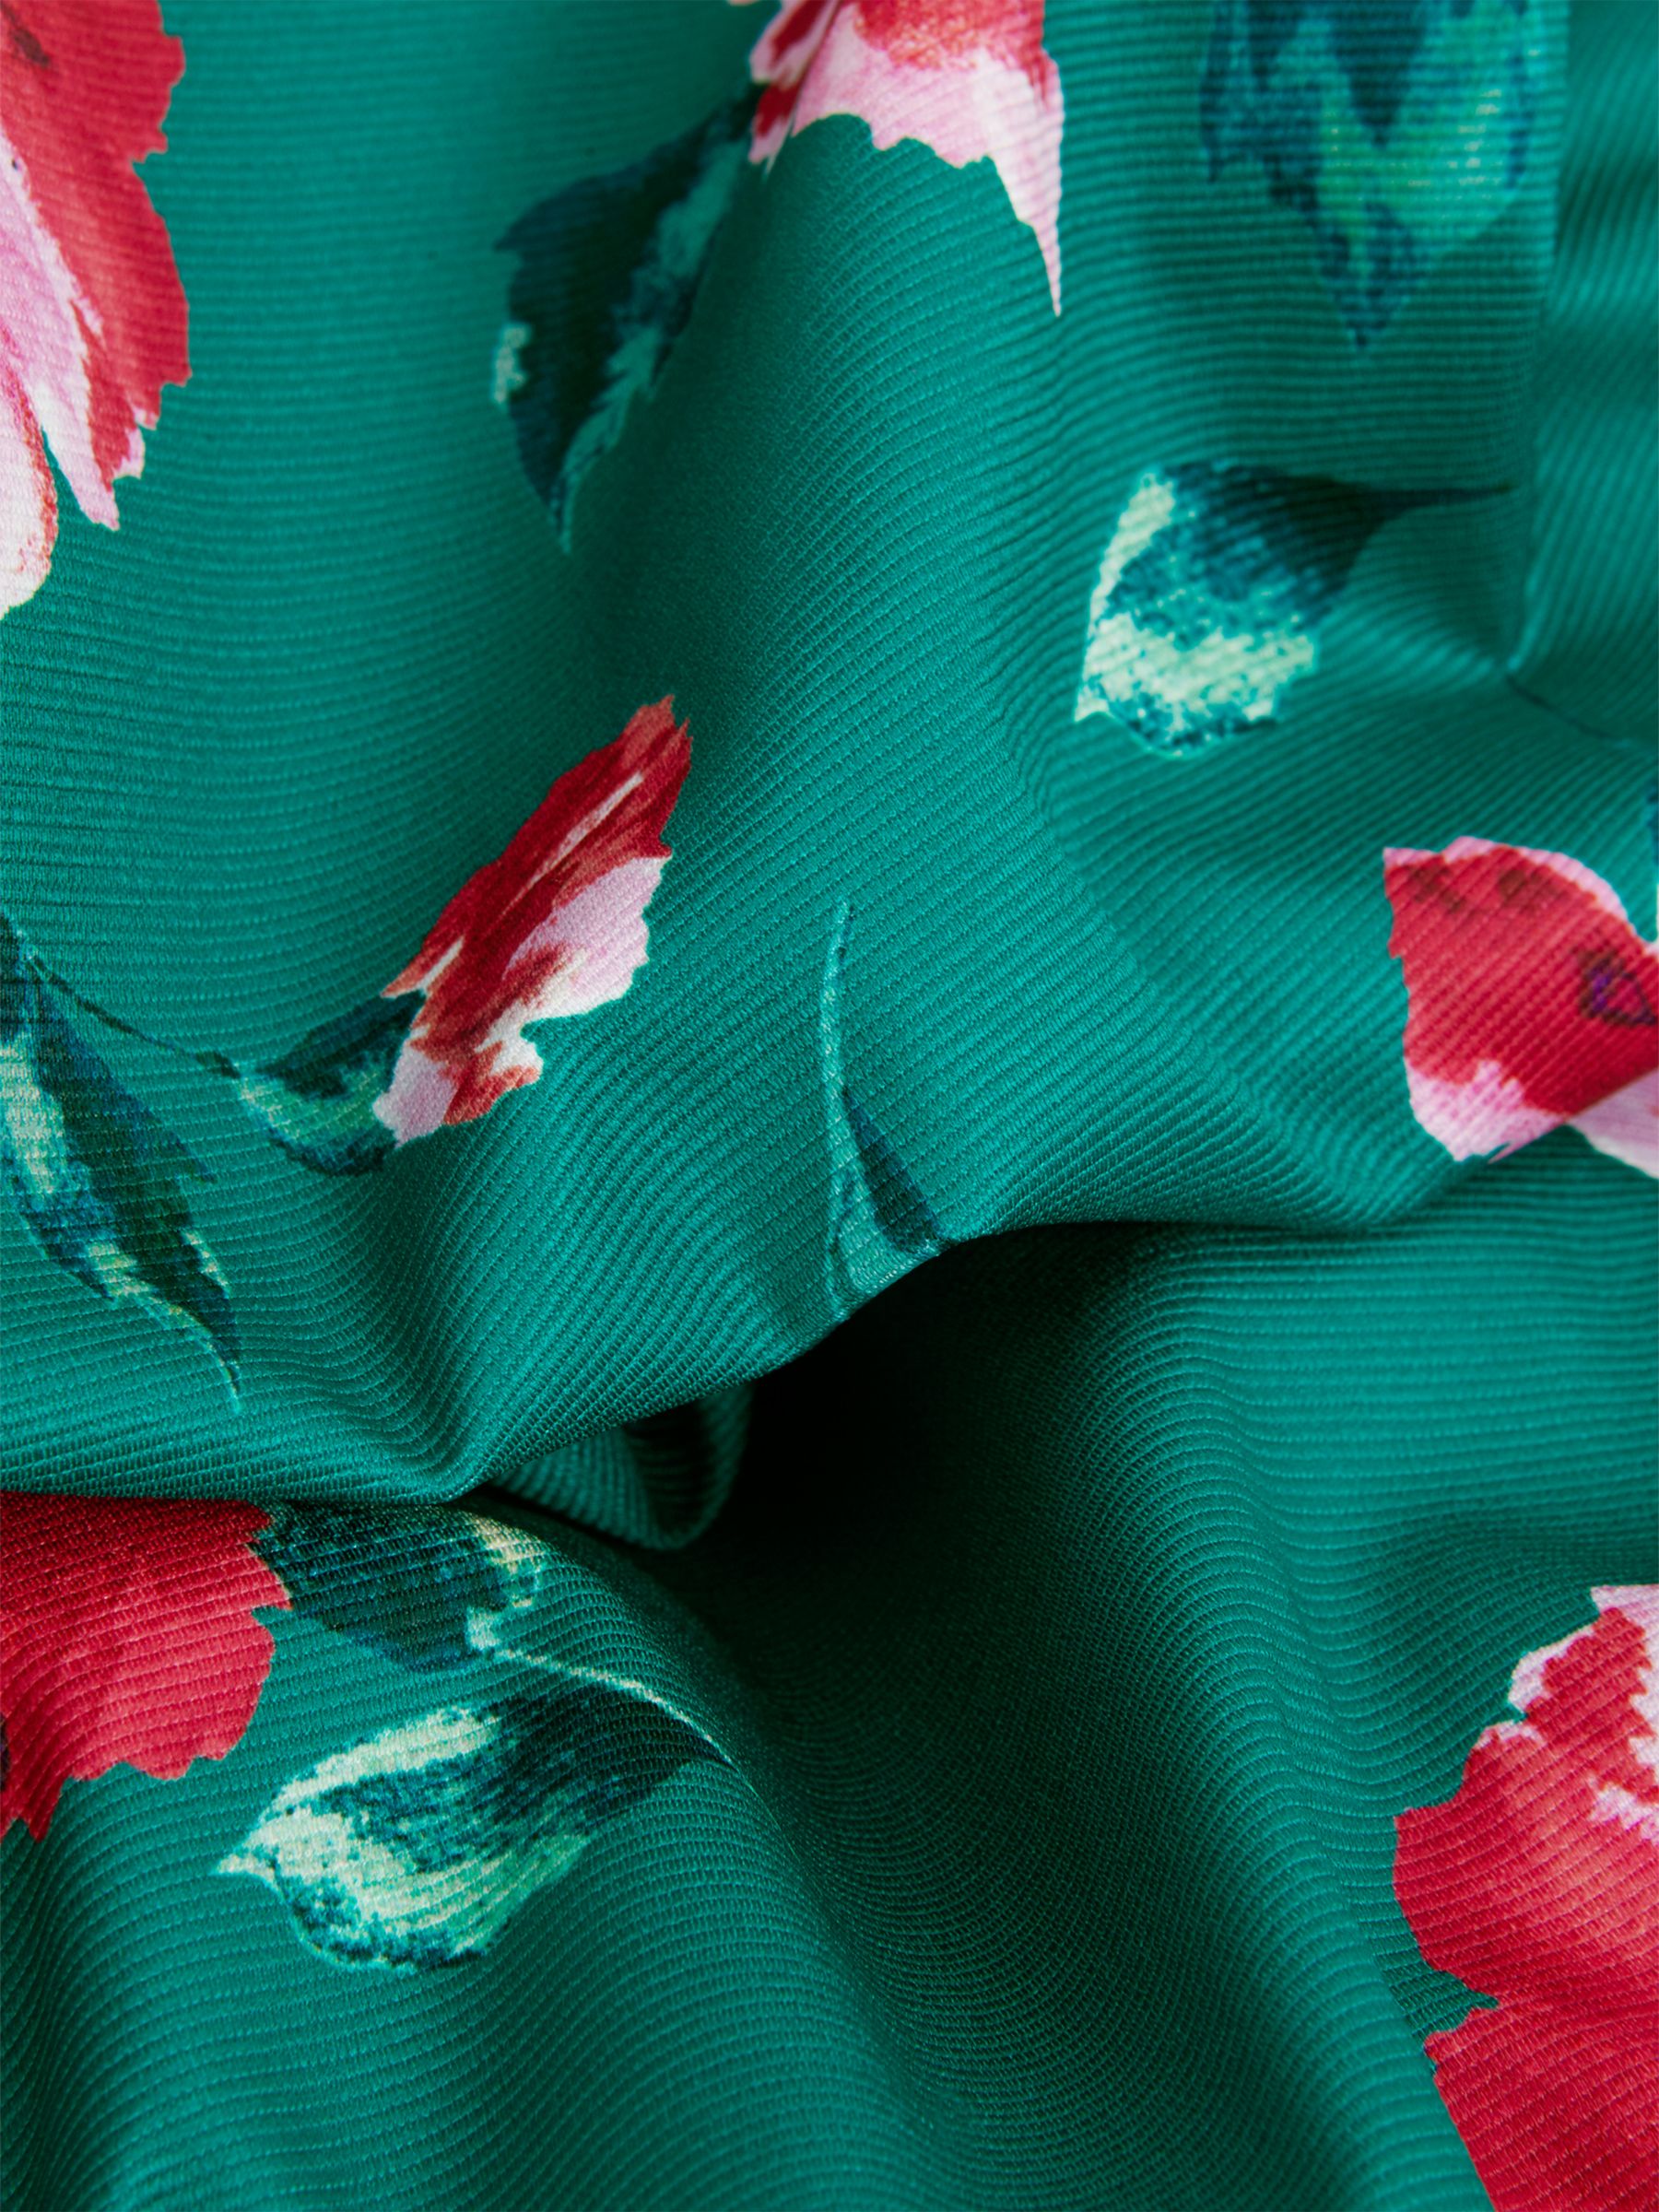 Hobbs Moira Floral Print Pencil Dress, Green/Multi, 6